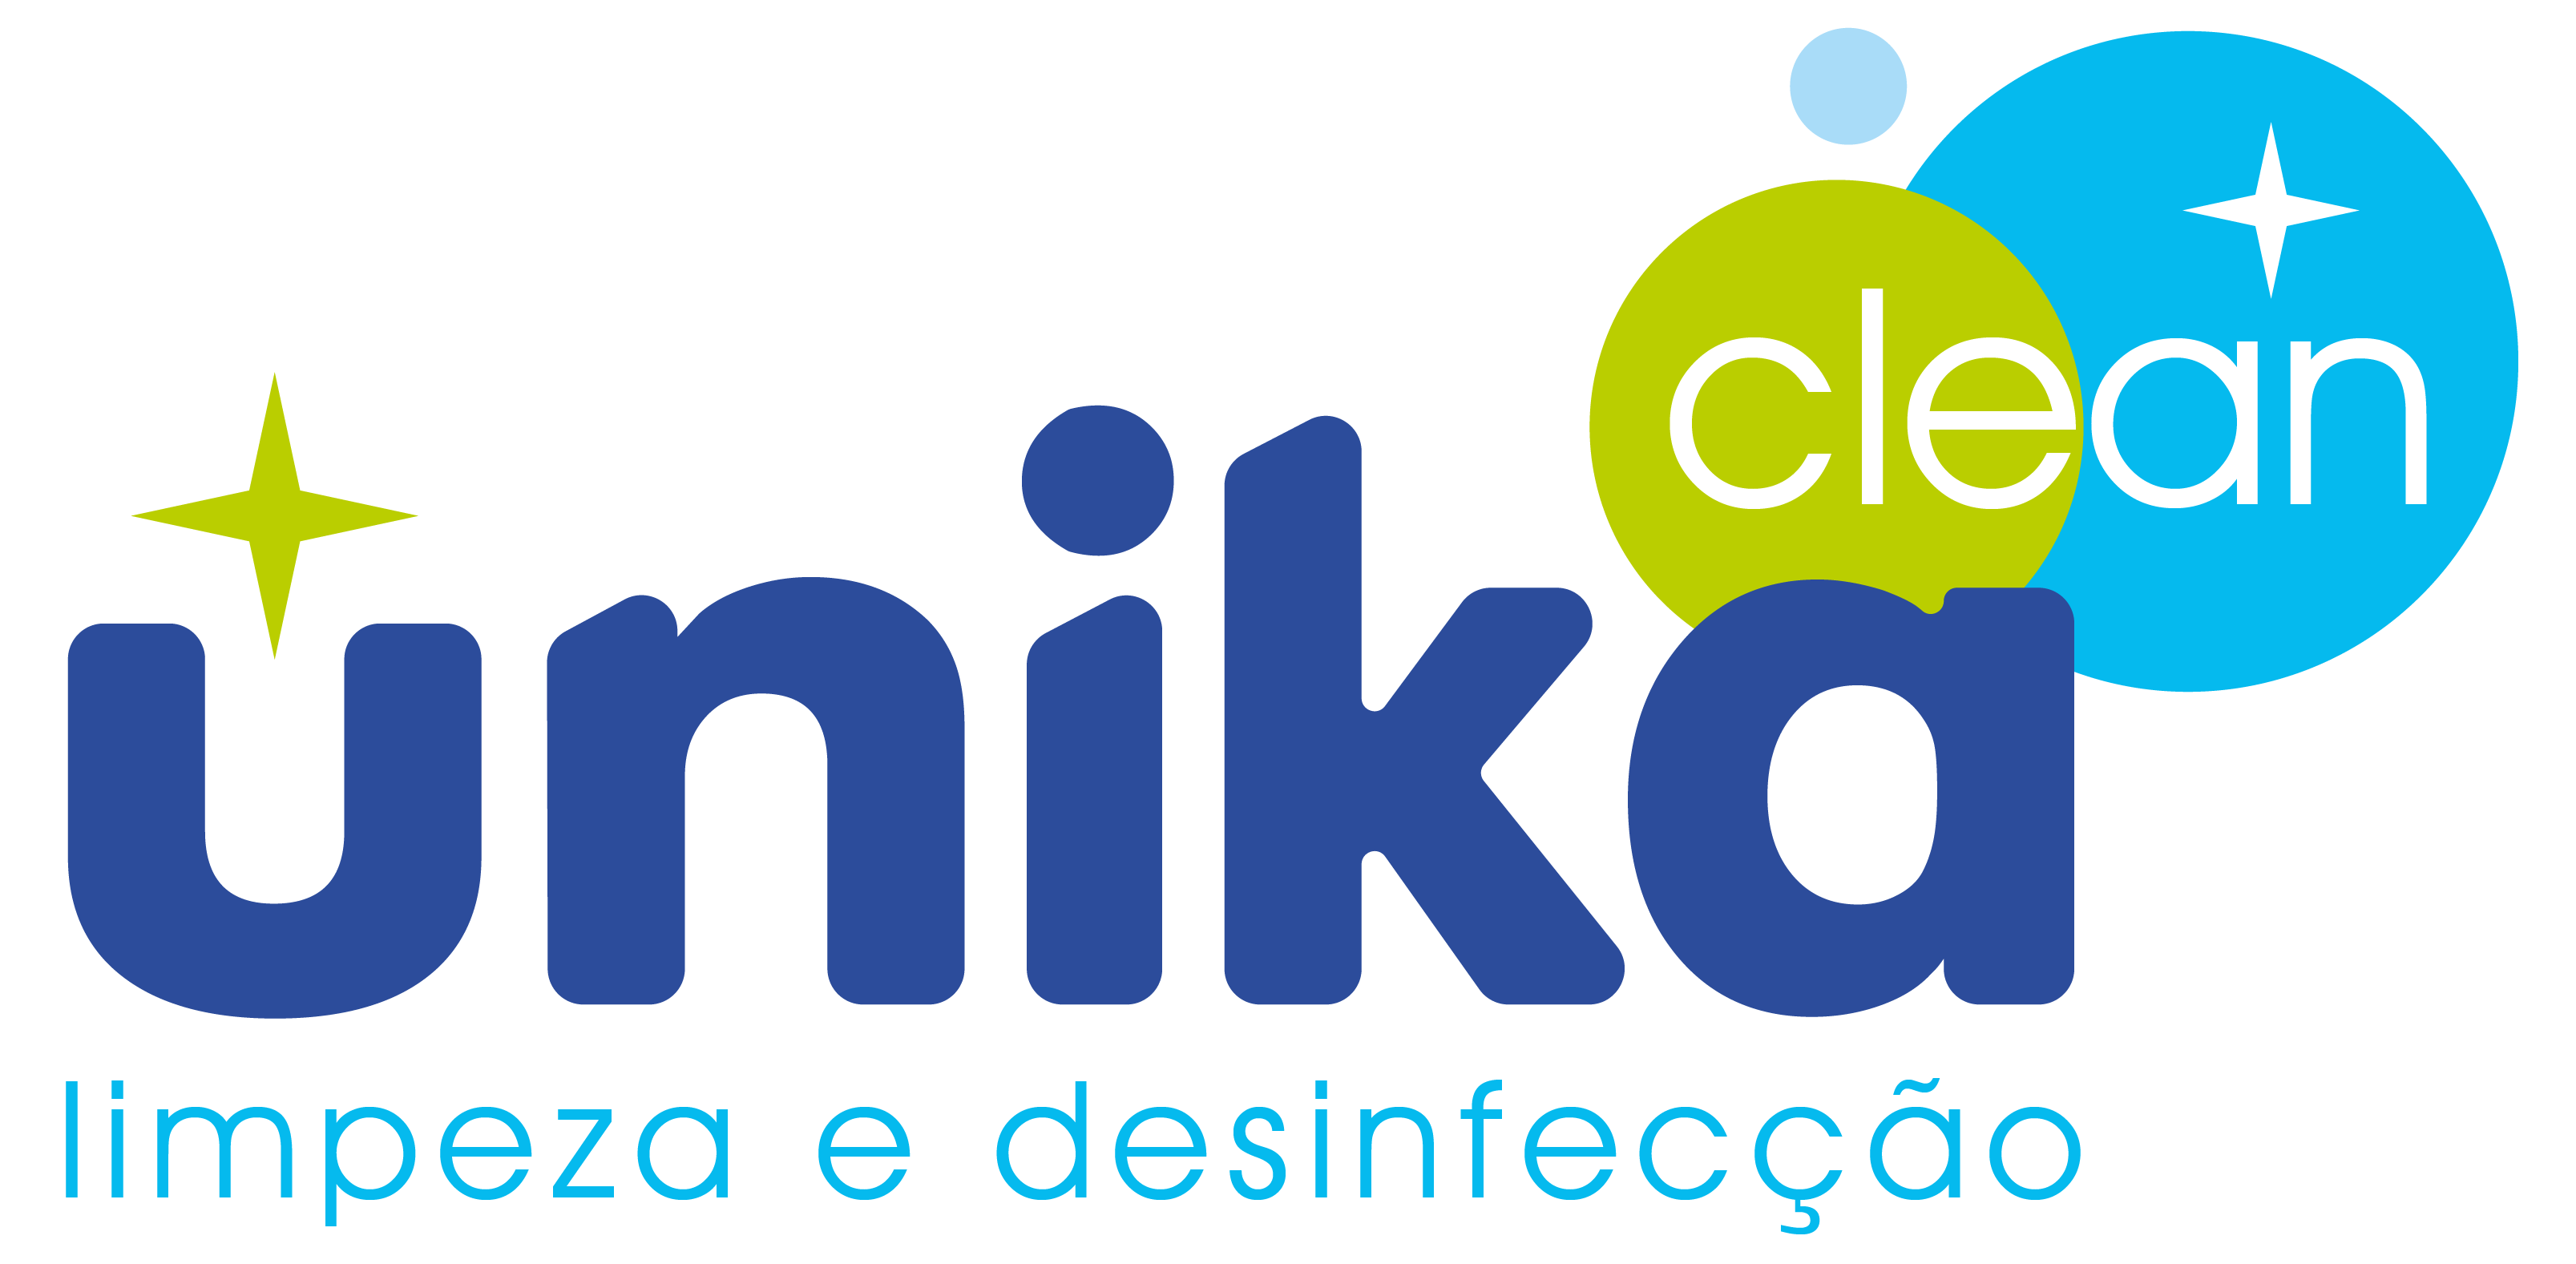 empresa de limpeza a seco de estofados - Unika Clean